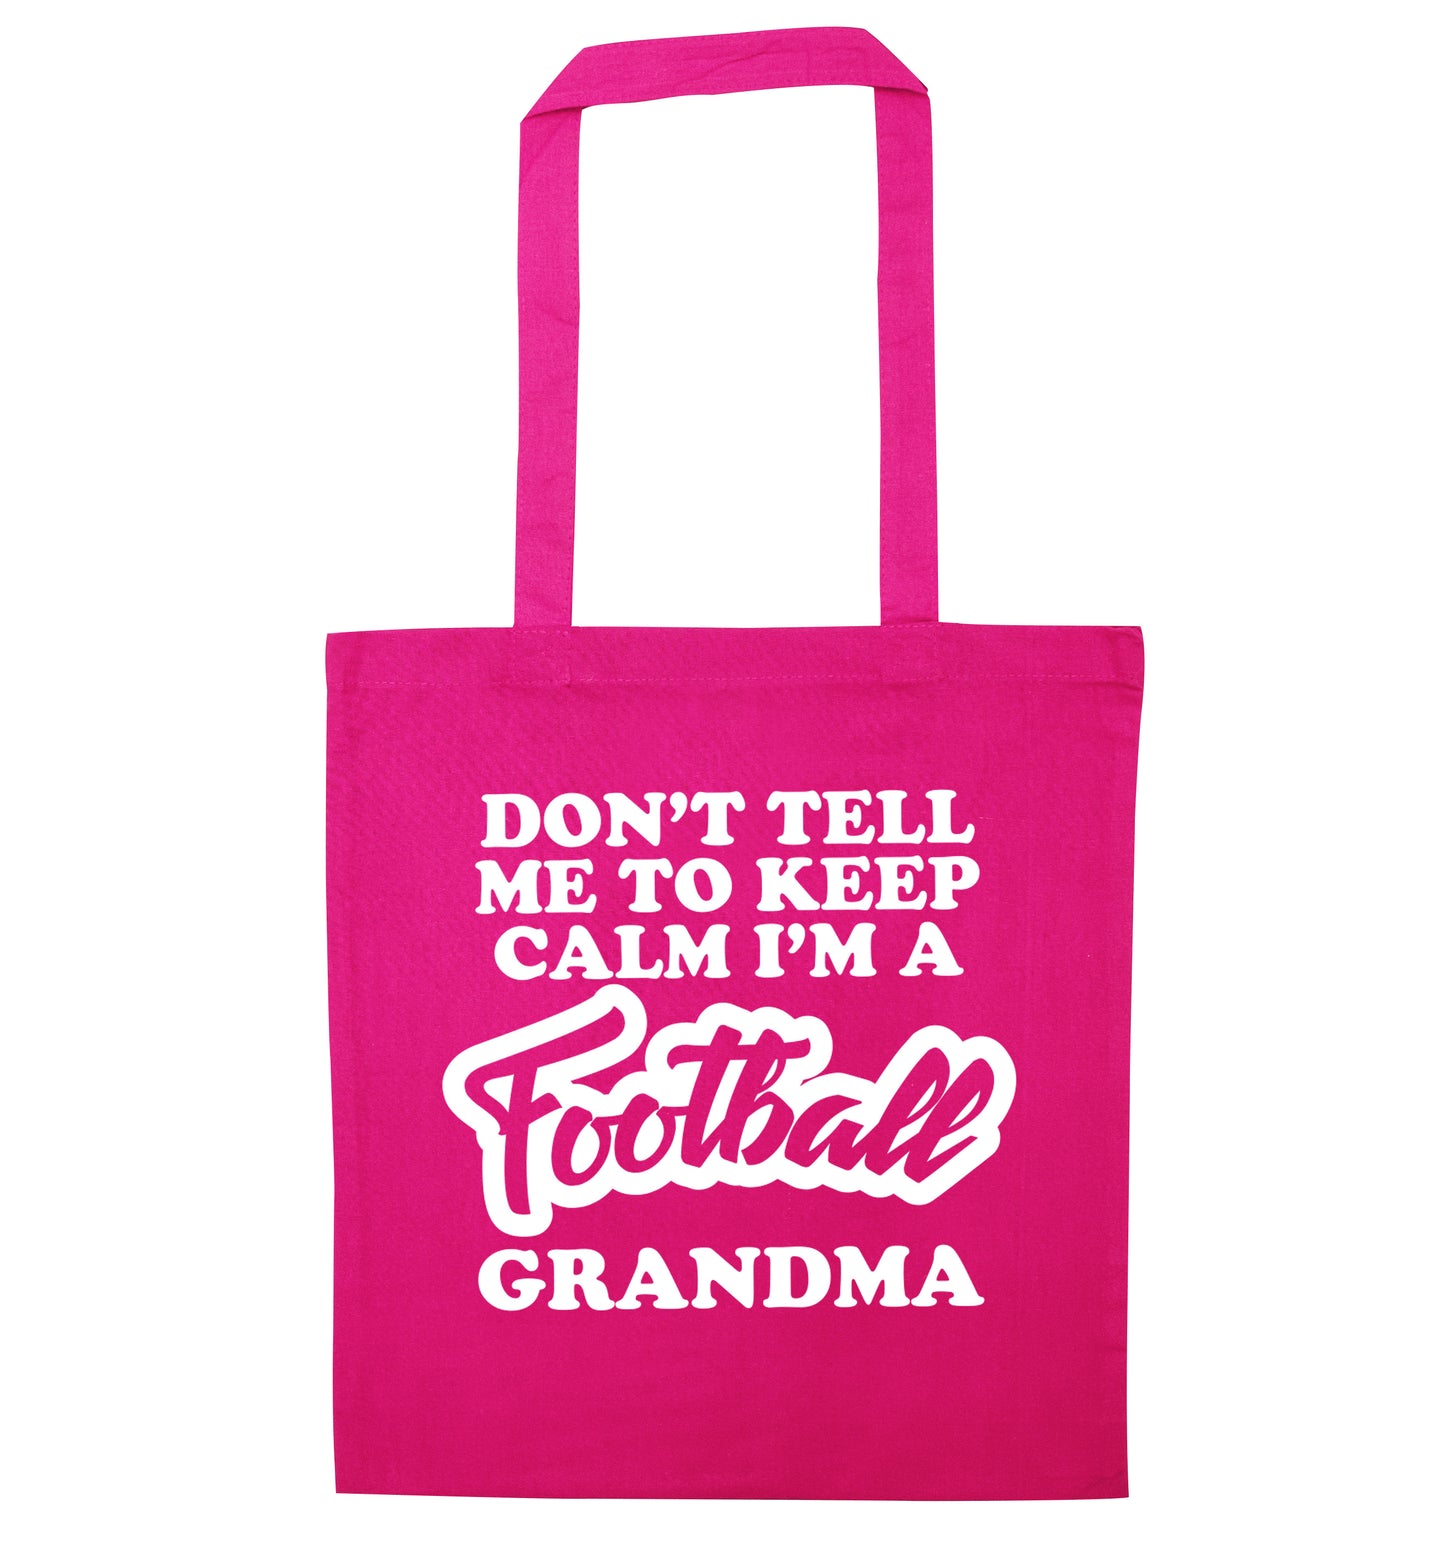 Don't tell me to keep calm I'm a football grandma pink tote bag